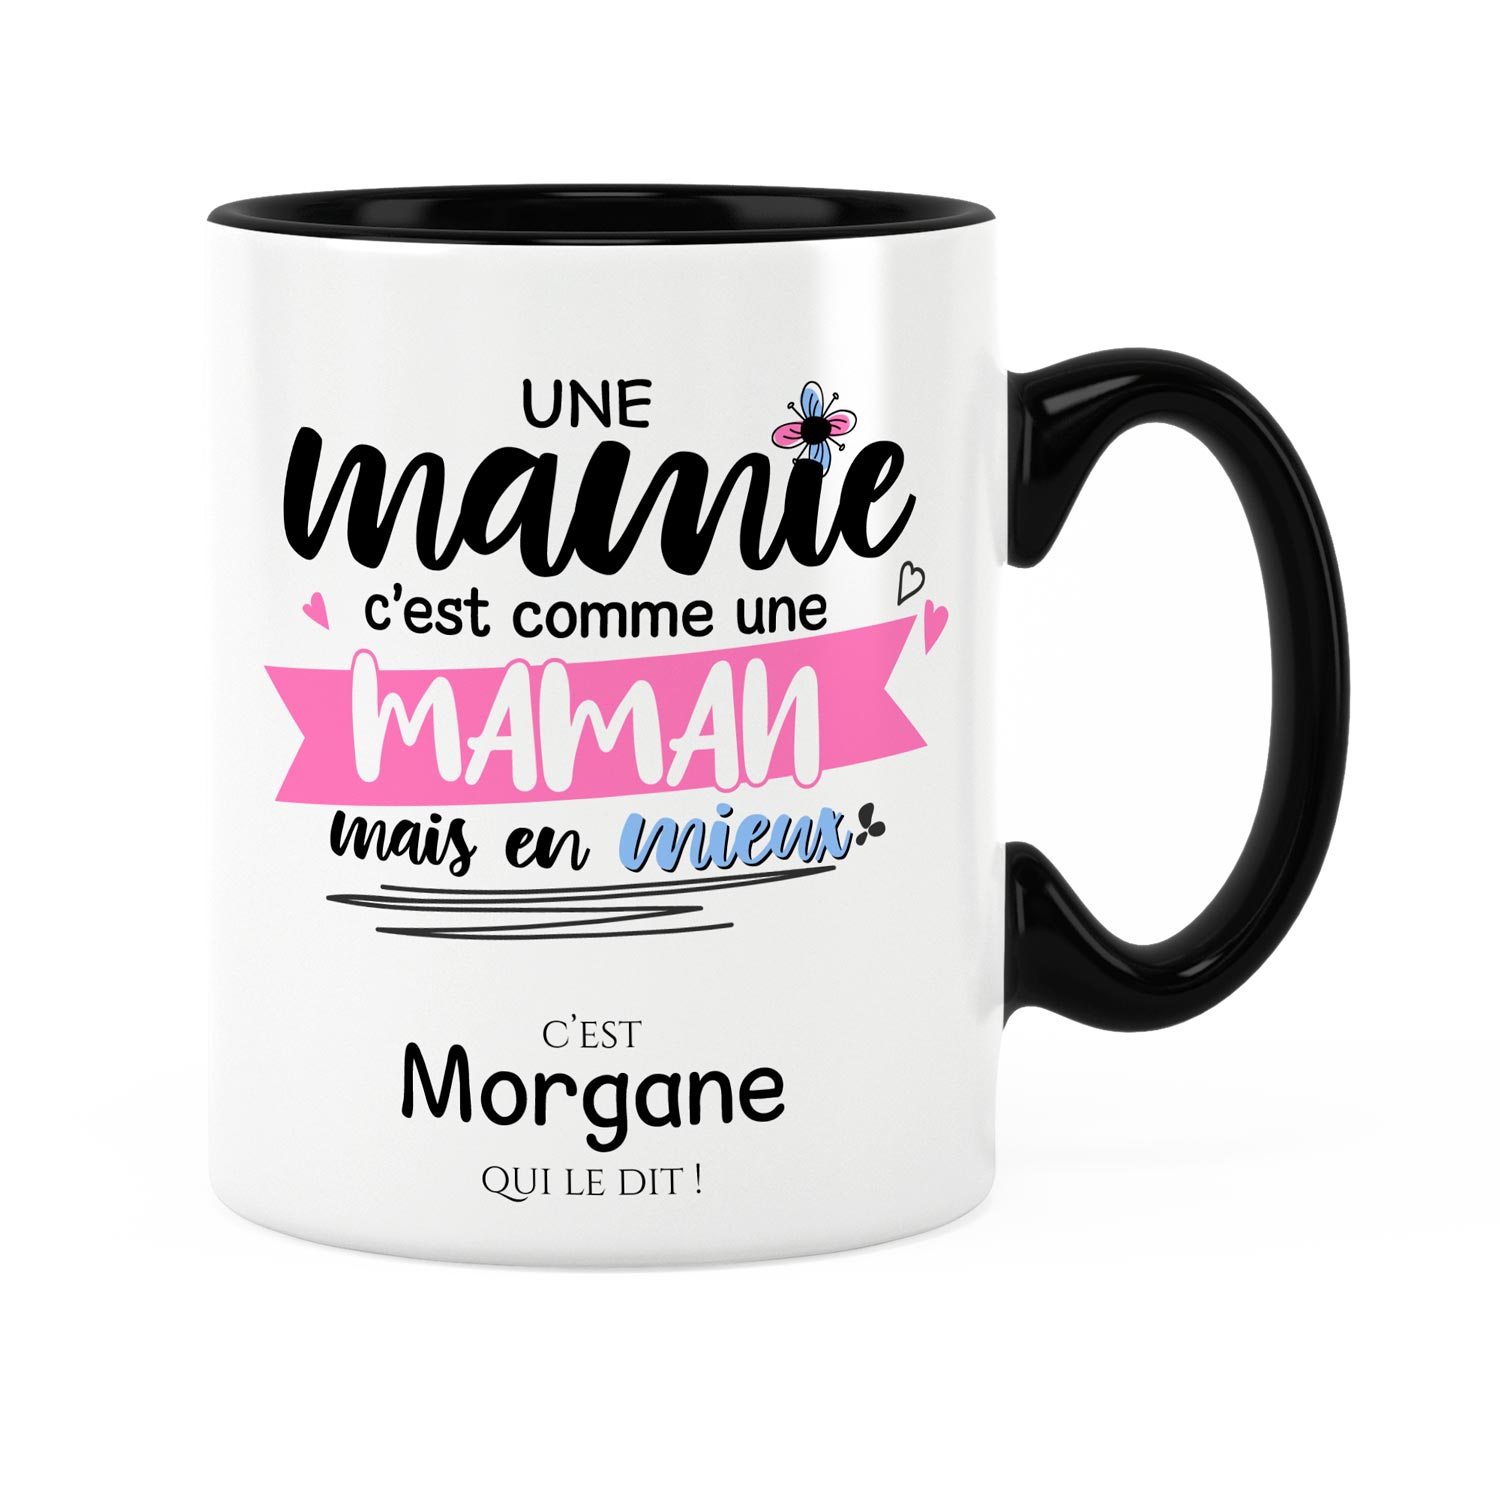 Le Mug de la Super Mamie - Cadeau grand-mère